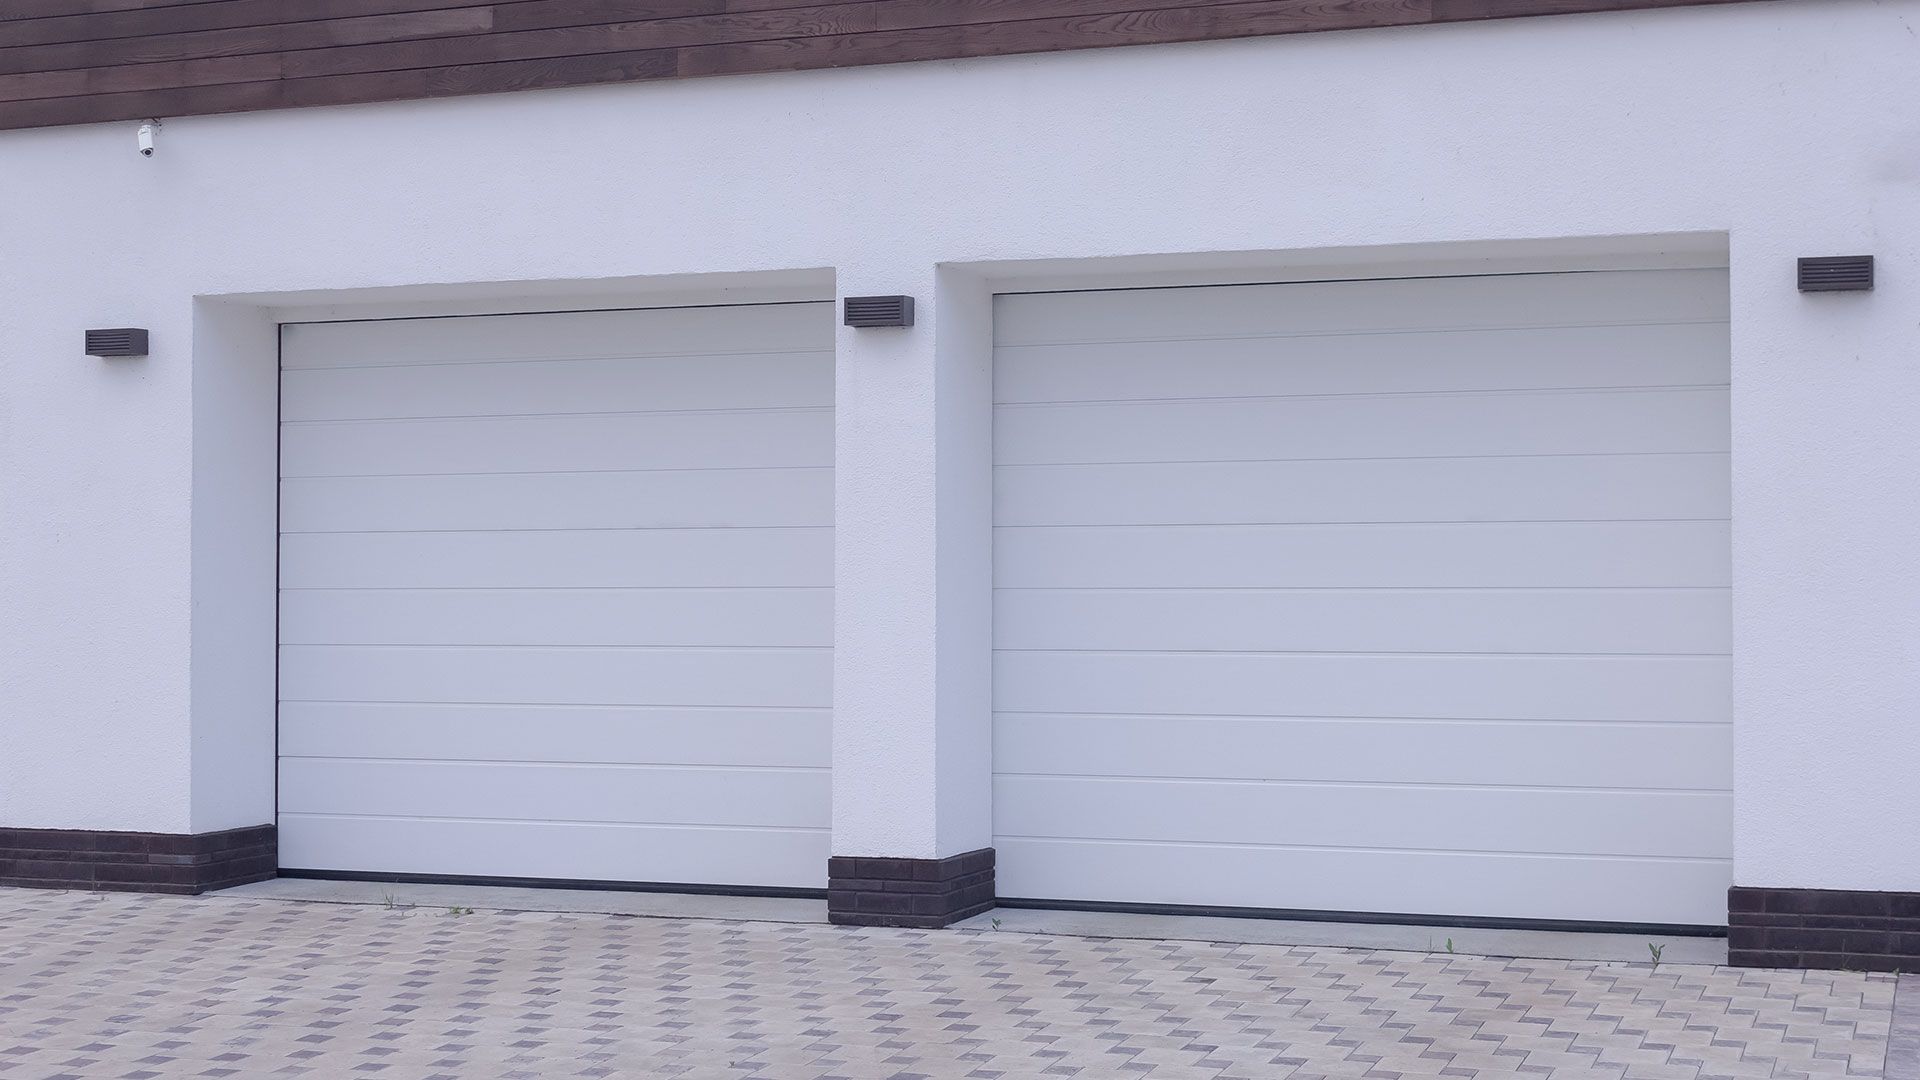 NexGen Windows offer bespoke garage doors